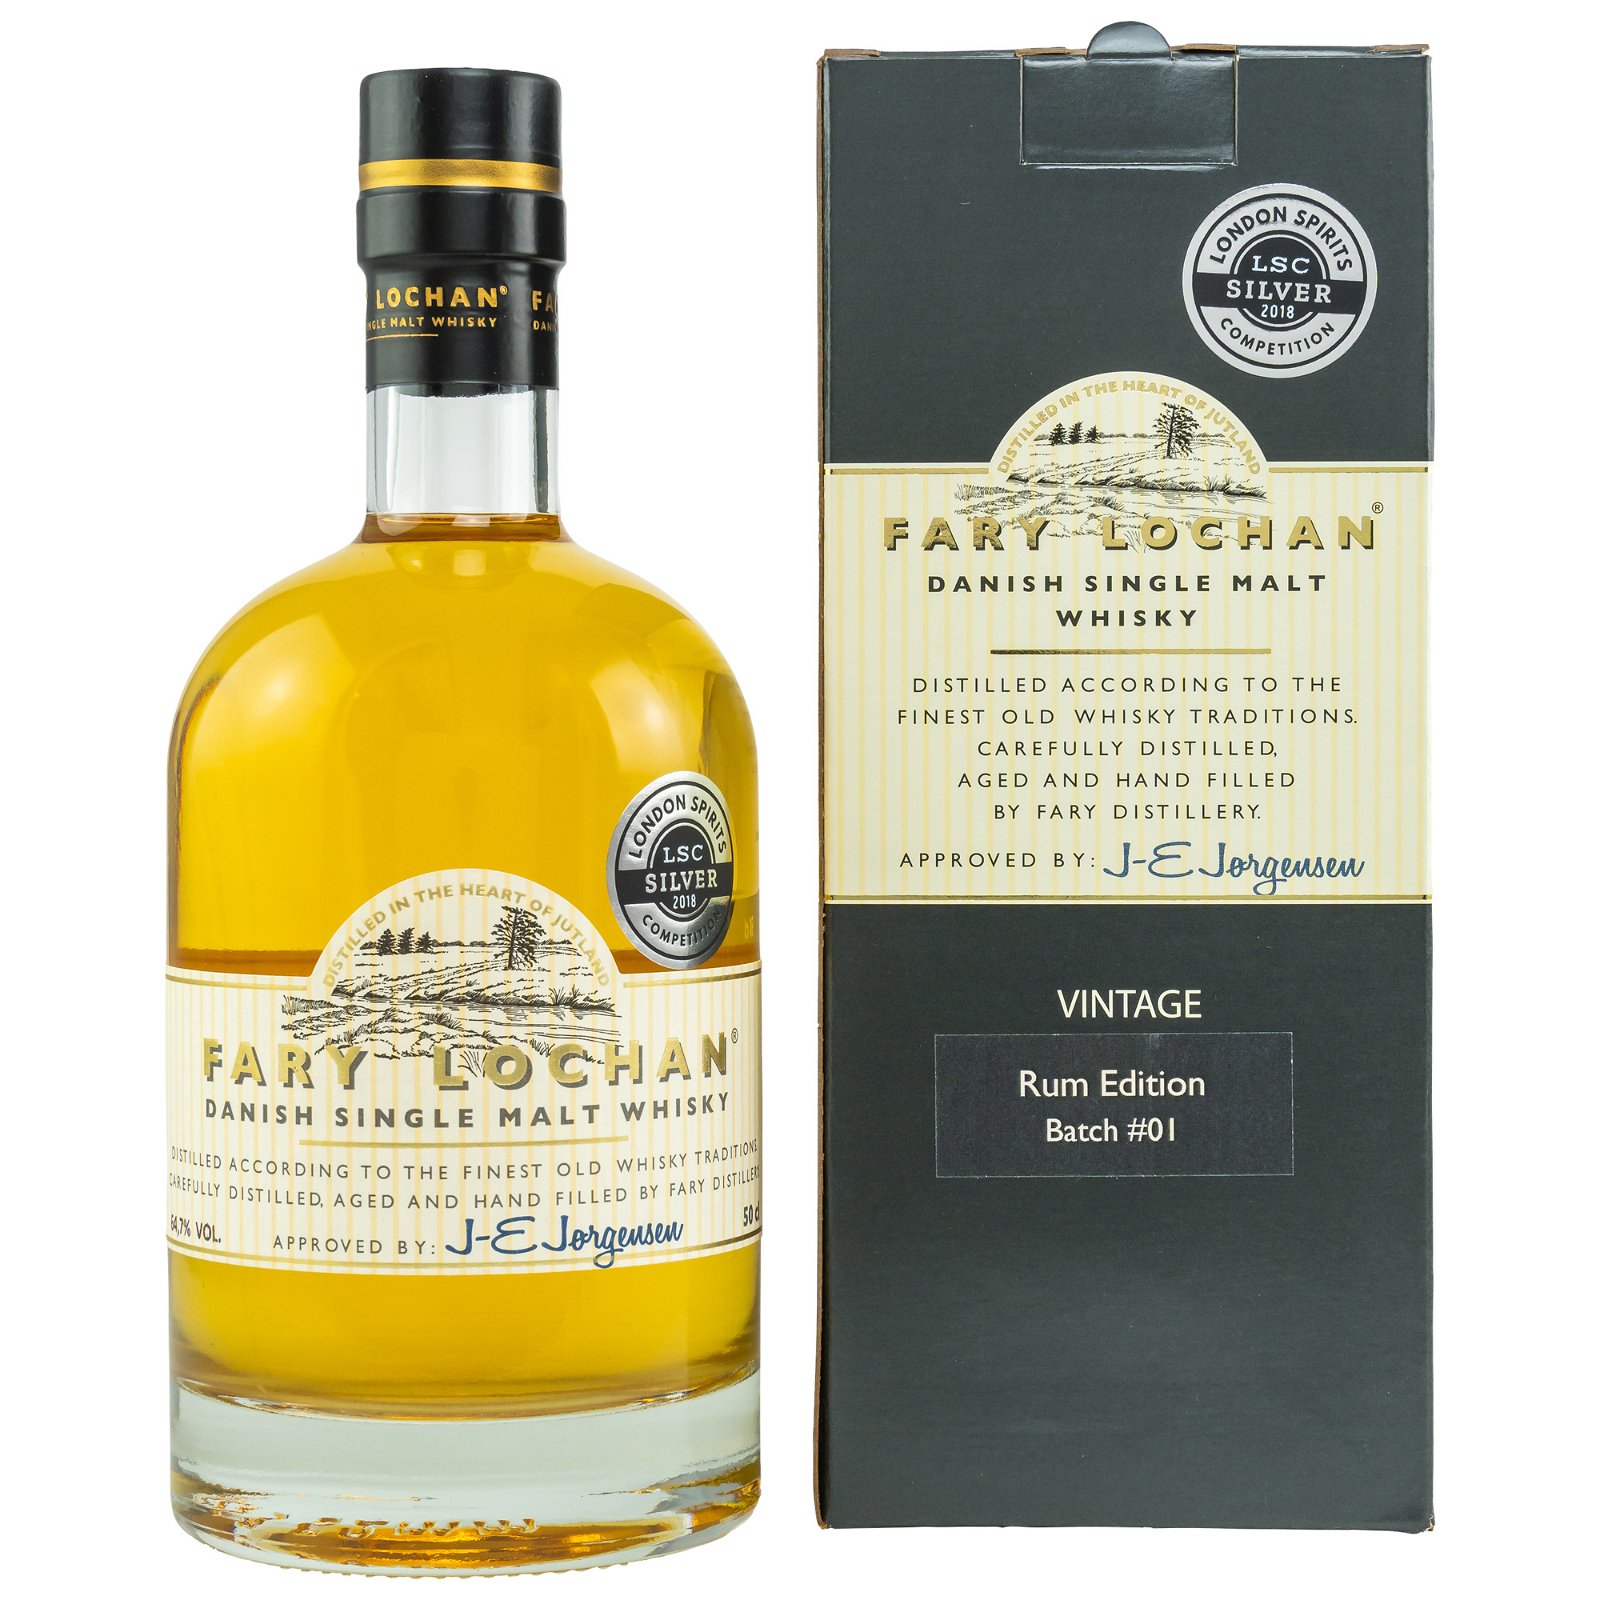 Fary Lochan 2012/2017 - 5 Jahre Vintage Rum Edition Batch No. 1